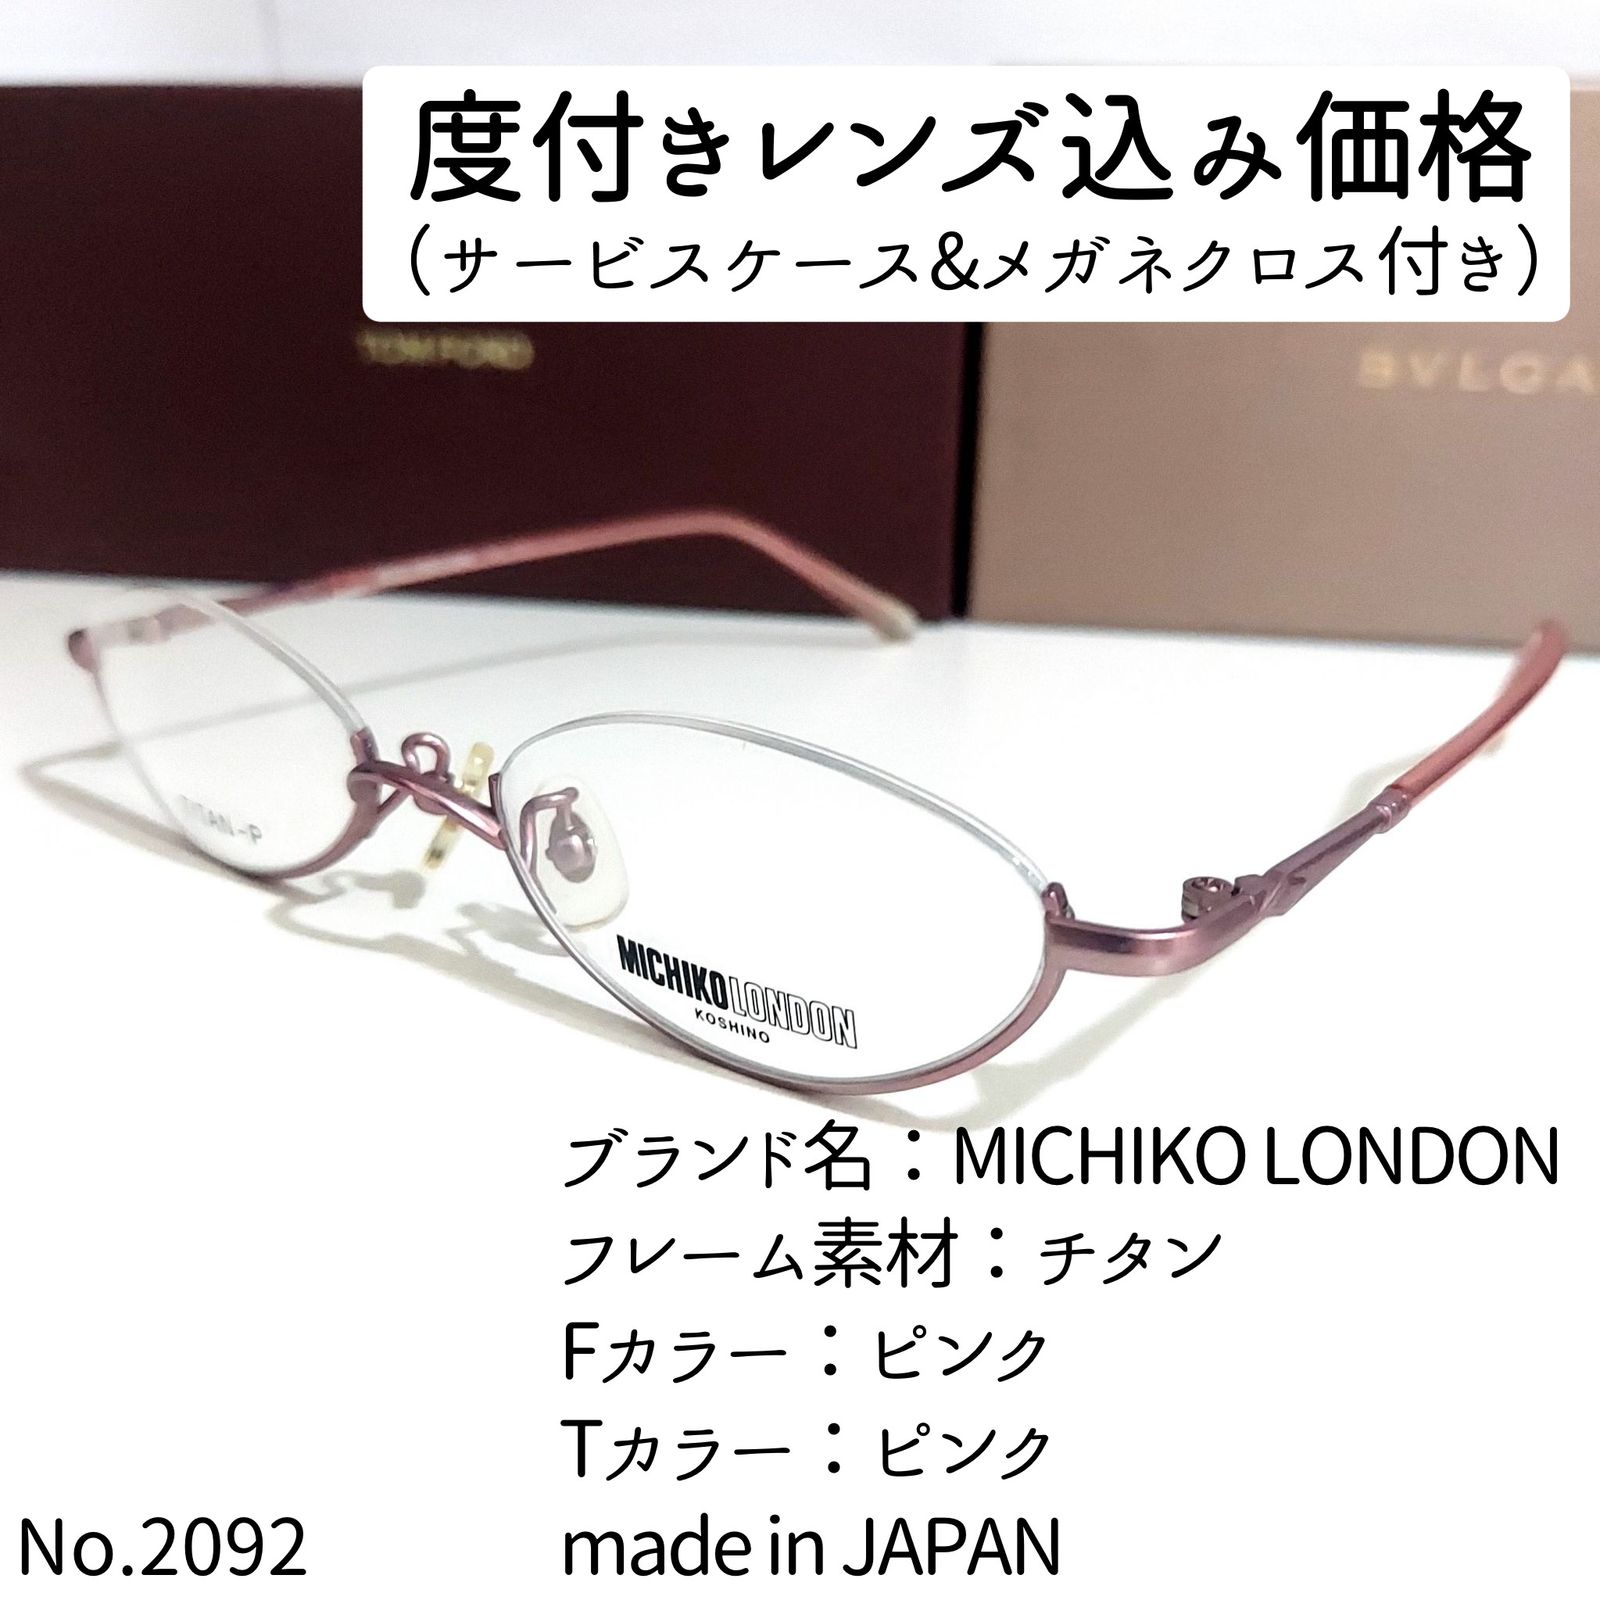 No.2092メガネ MICHIKO LONDON【度数入り込み価格】 - スッキリ生活